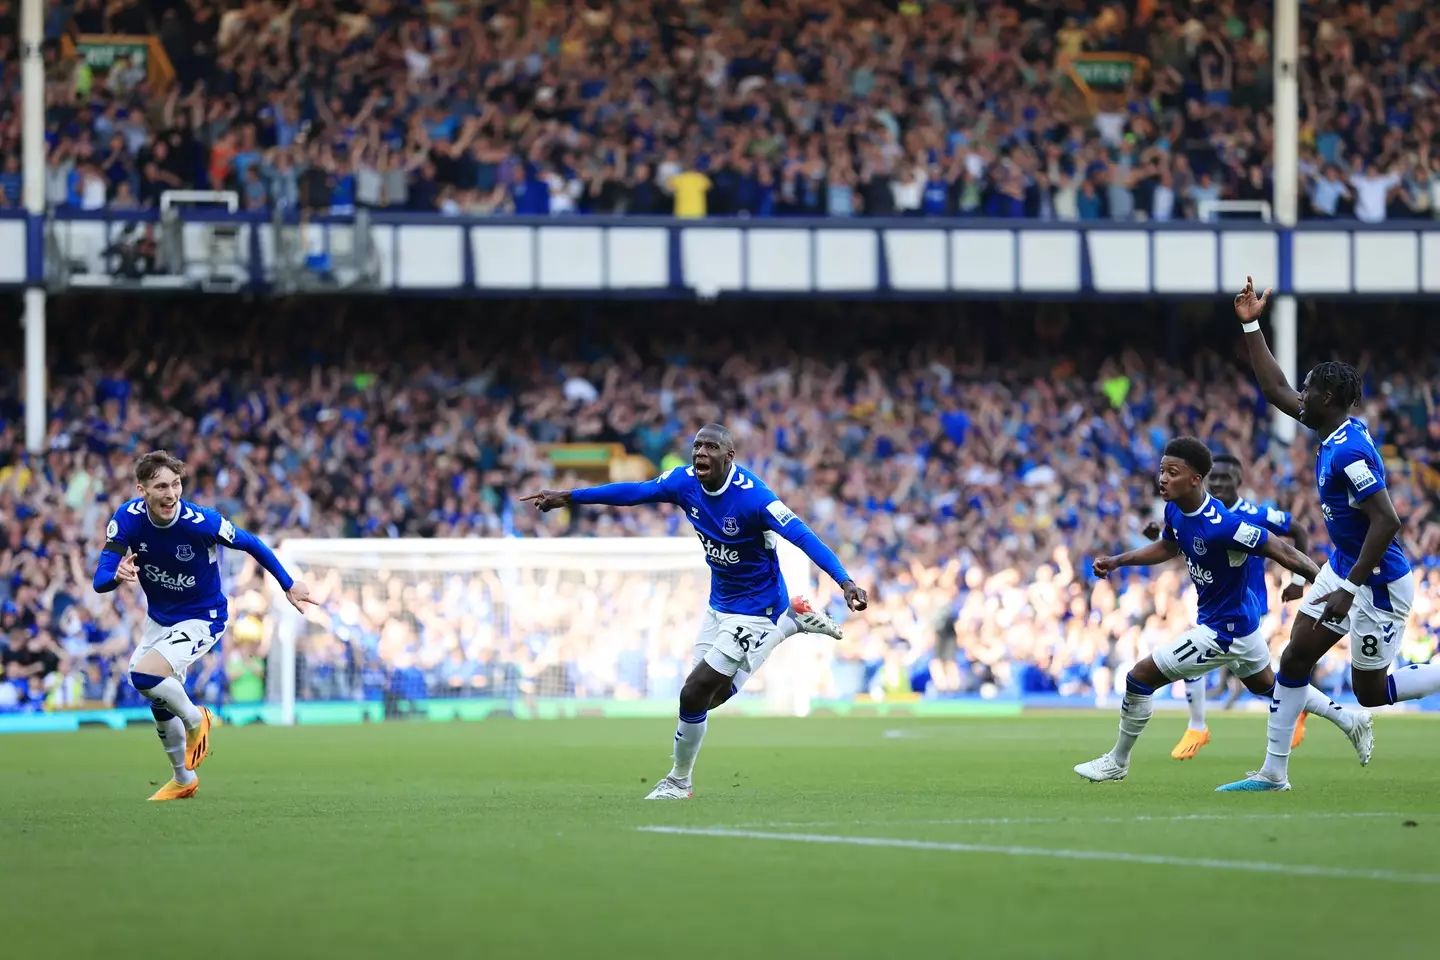 Doucoure celebrates scoring the goal that kept Everton up. Image: Getty